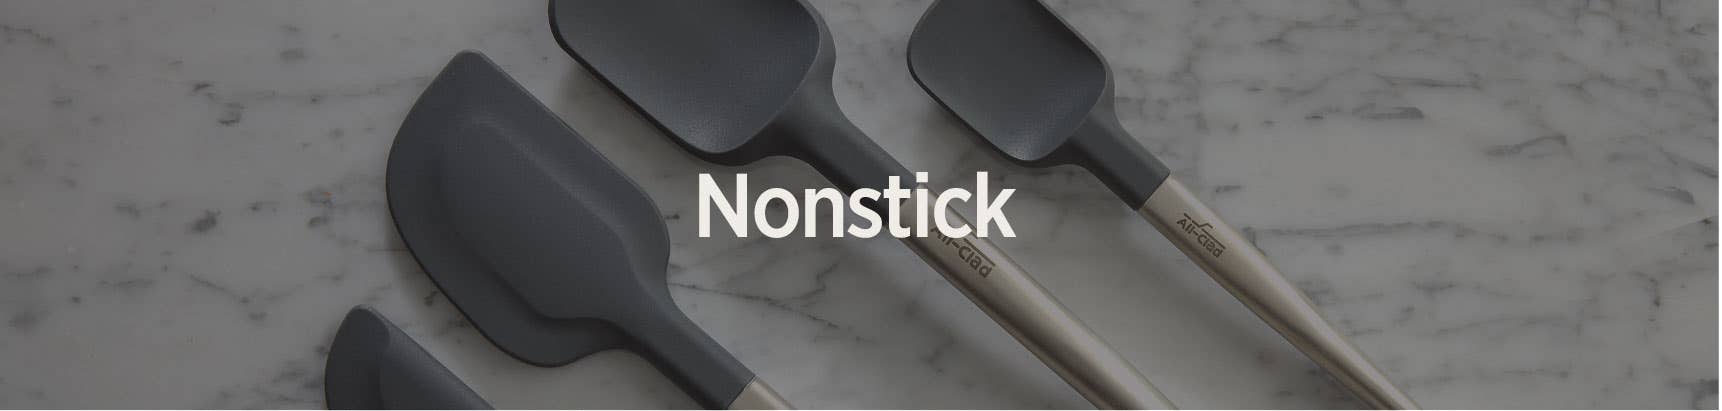 Nonstick